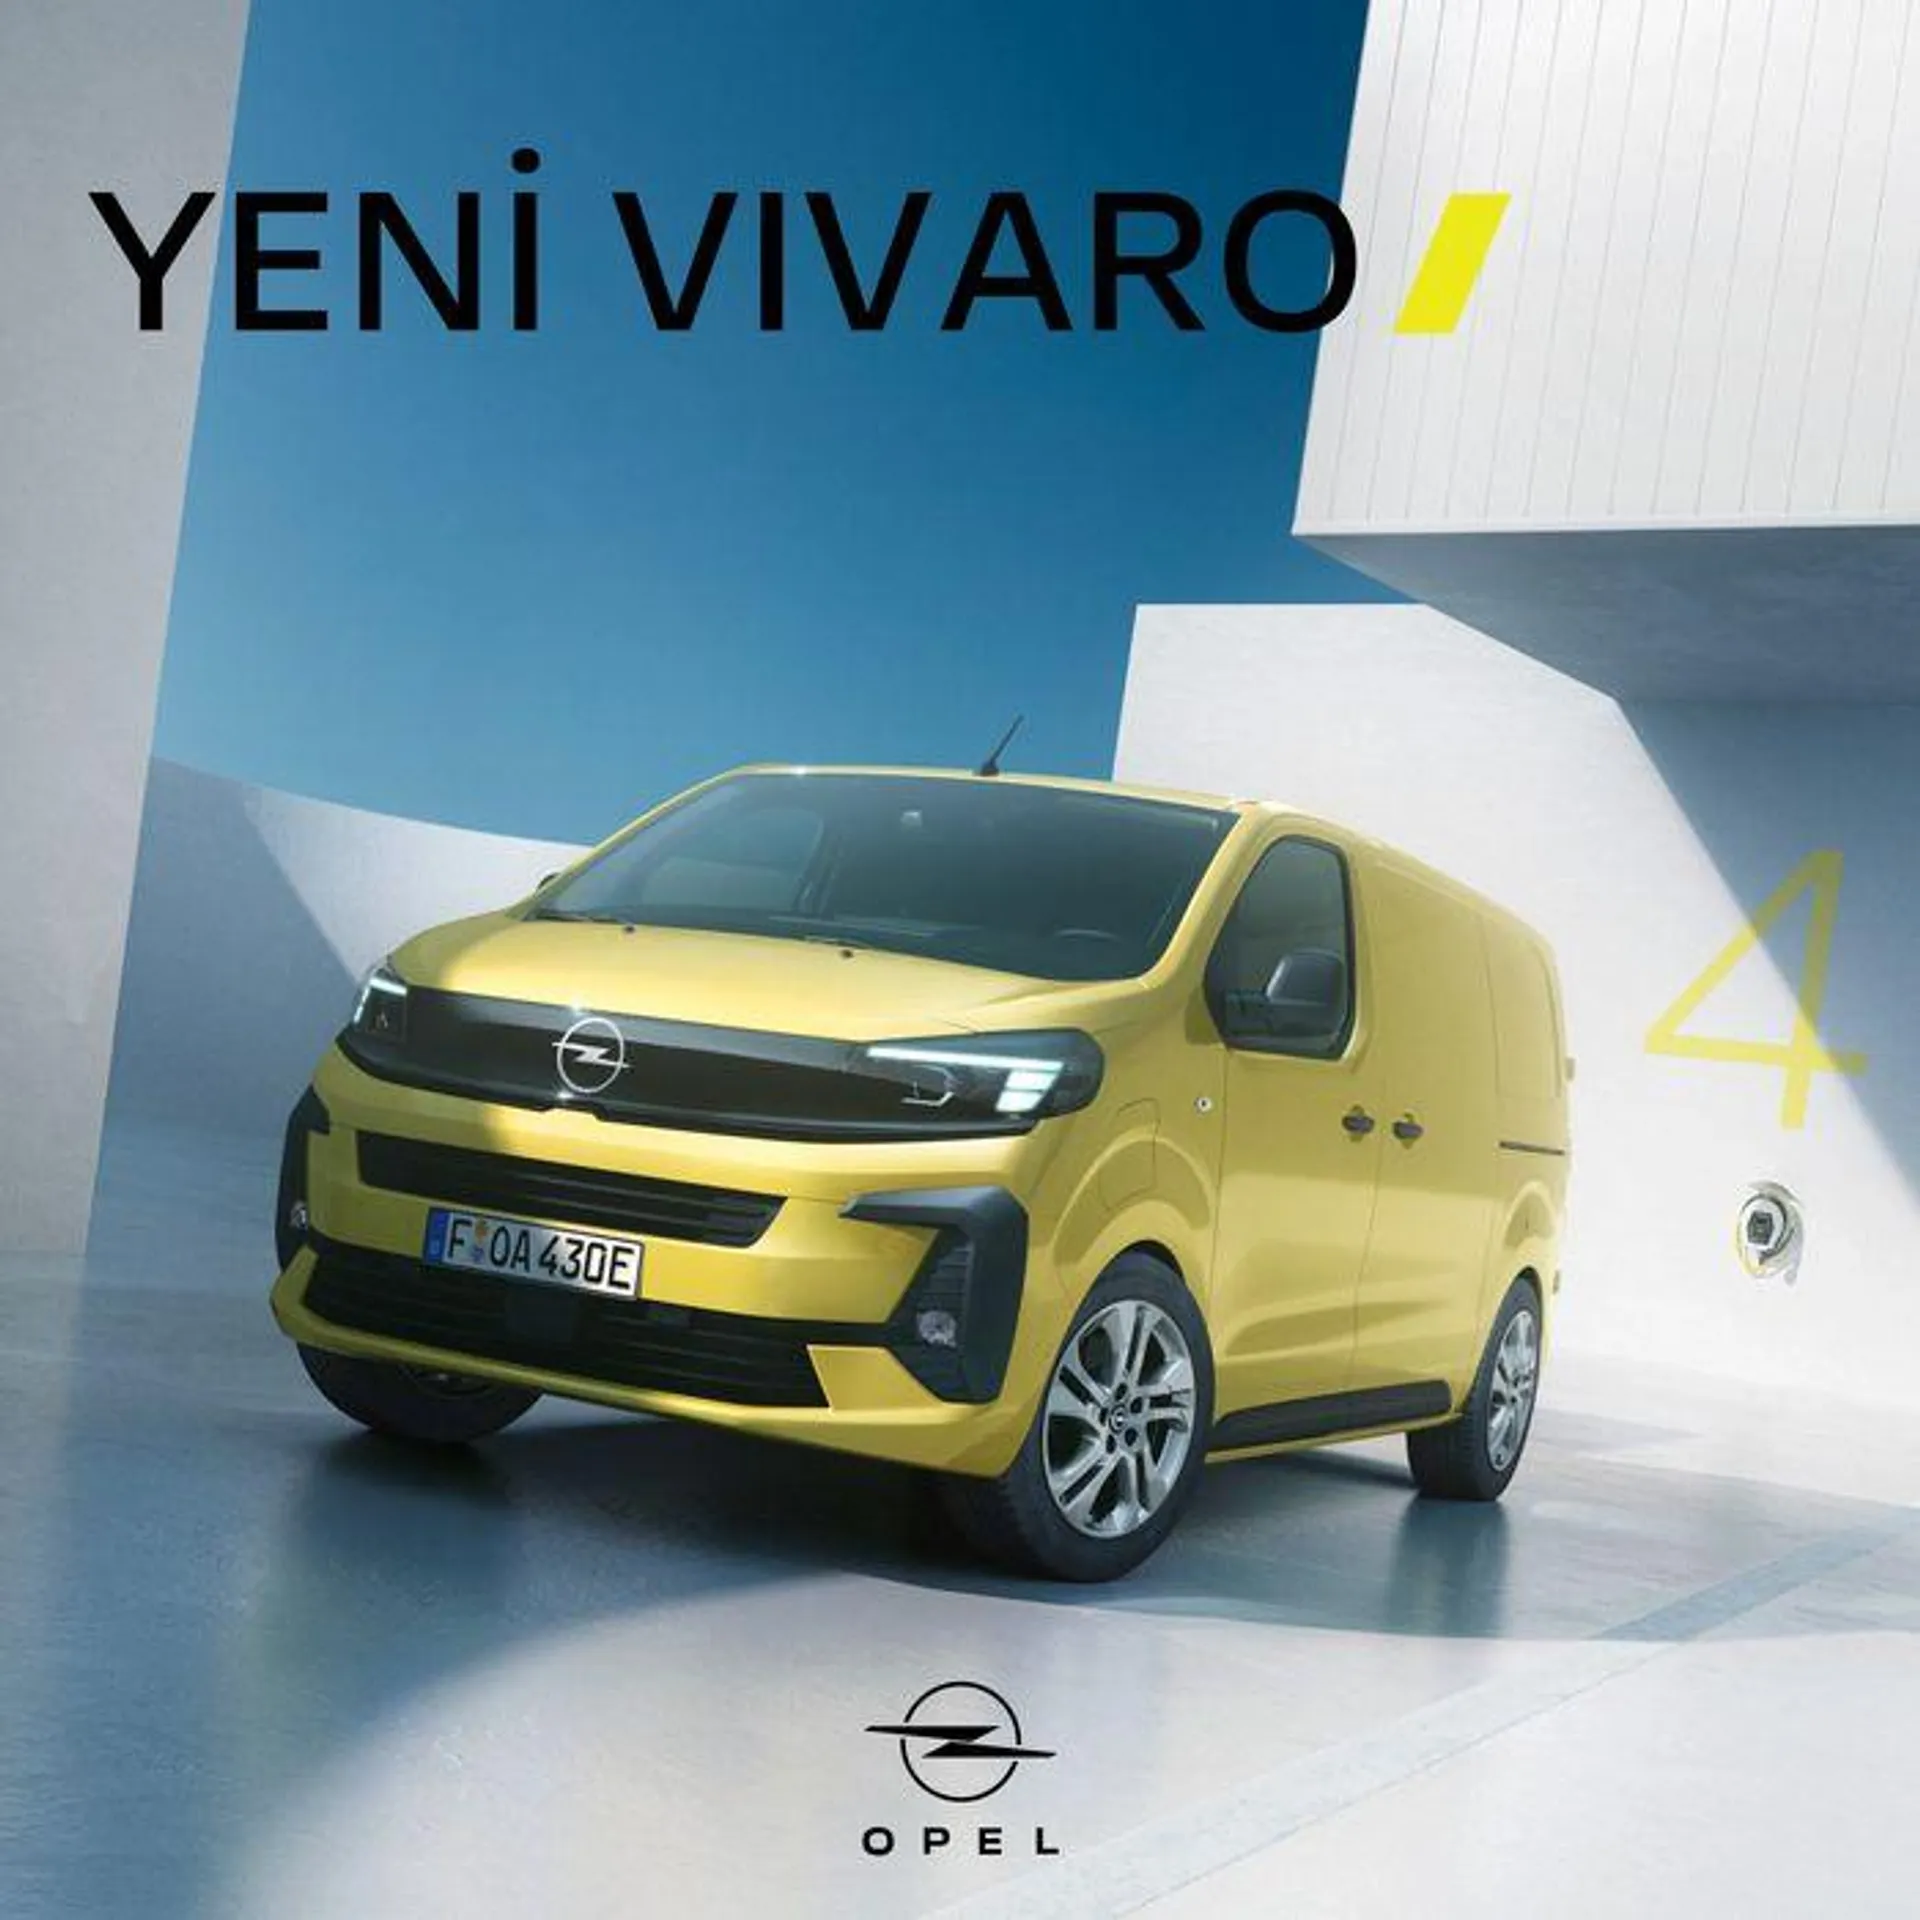 Opel Yeni Vivaro Cargo - 1